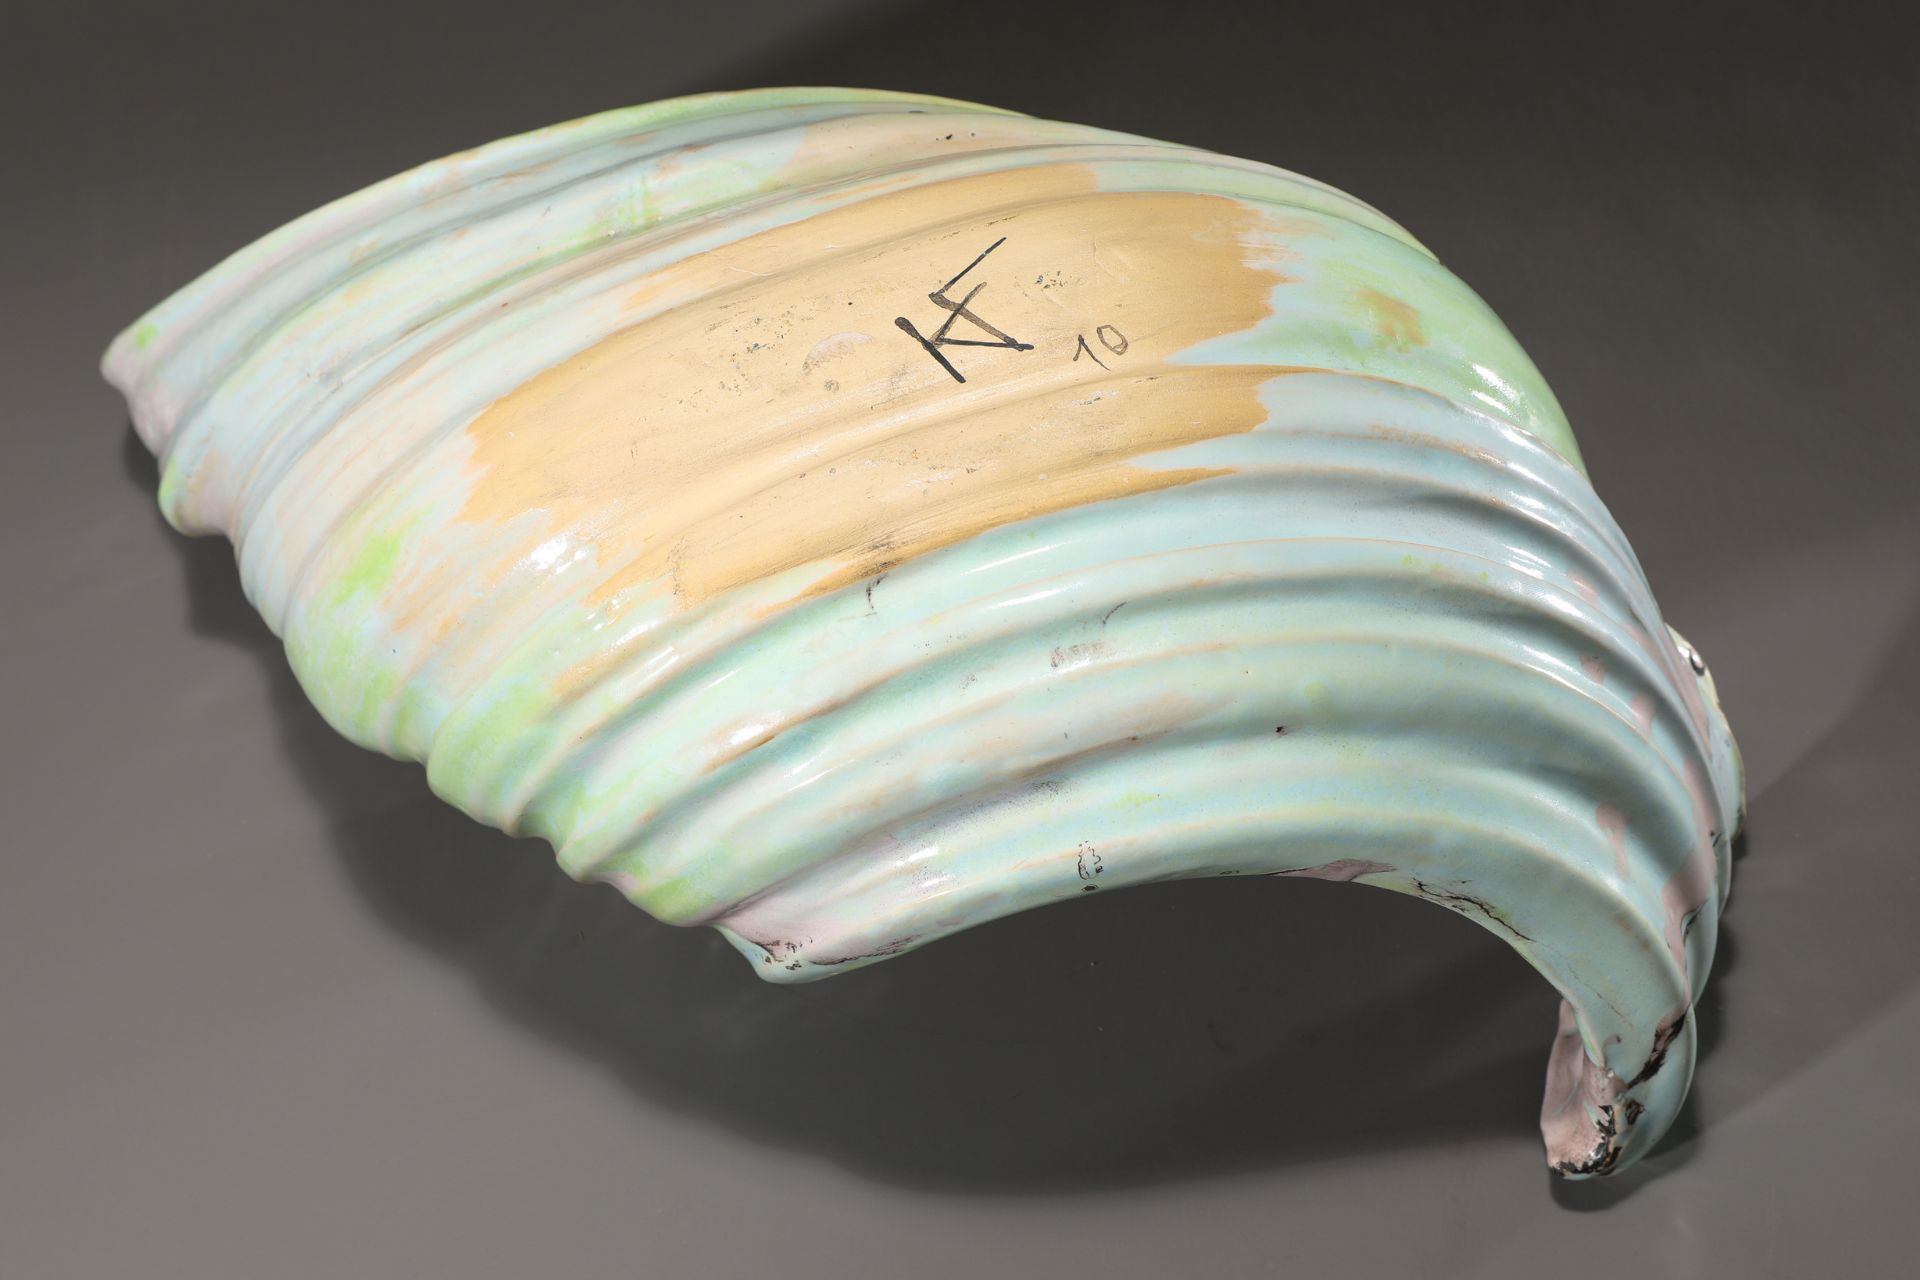 Karl Fulle, ceramic object wave, 2010 - Image 7 of 8